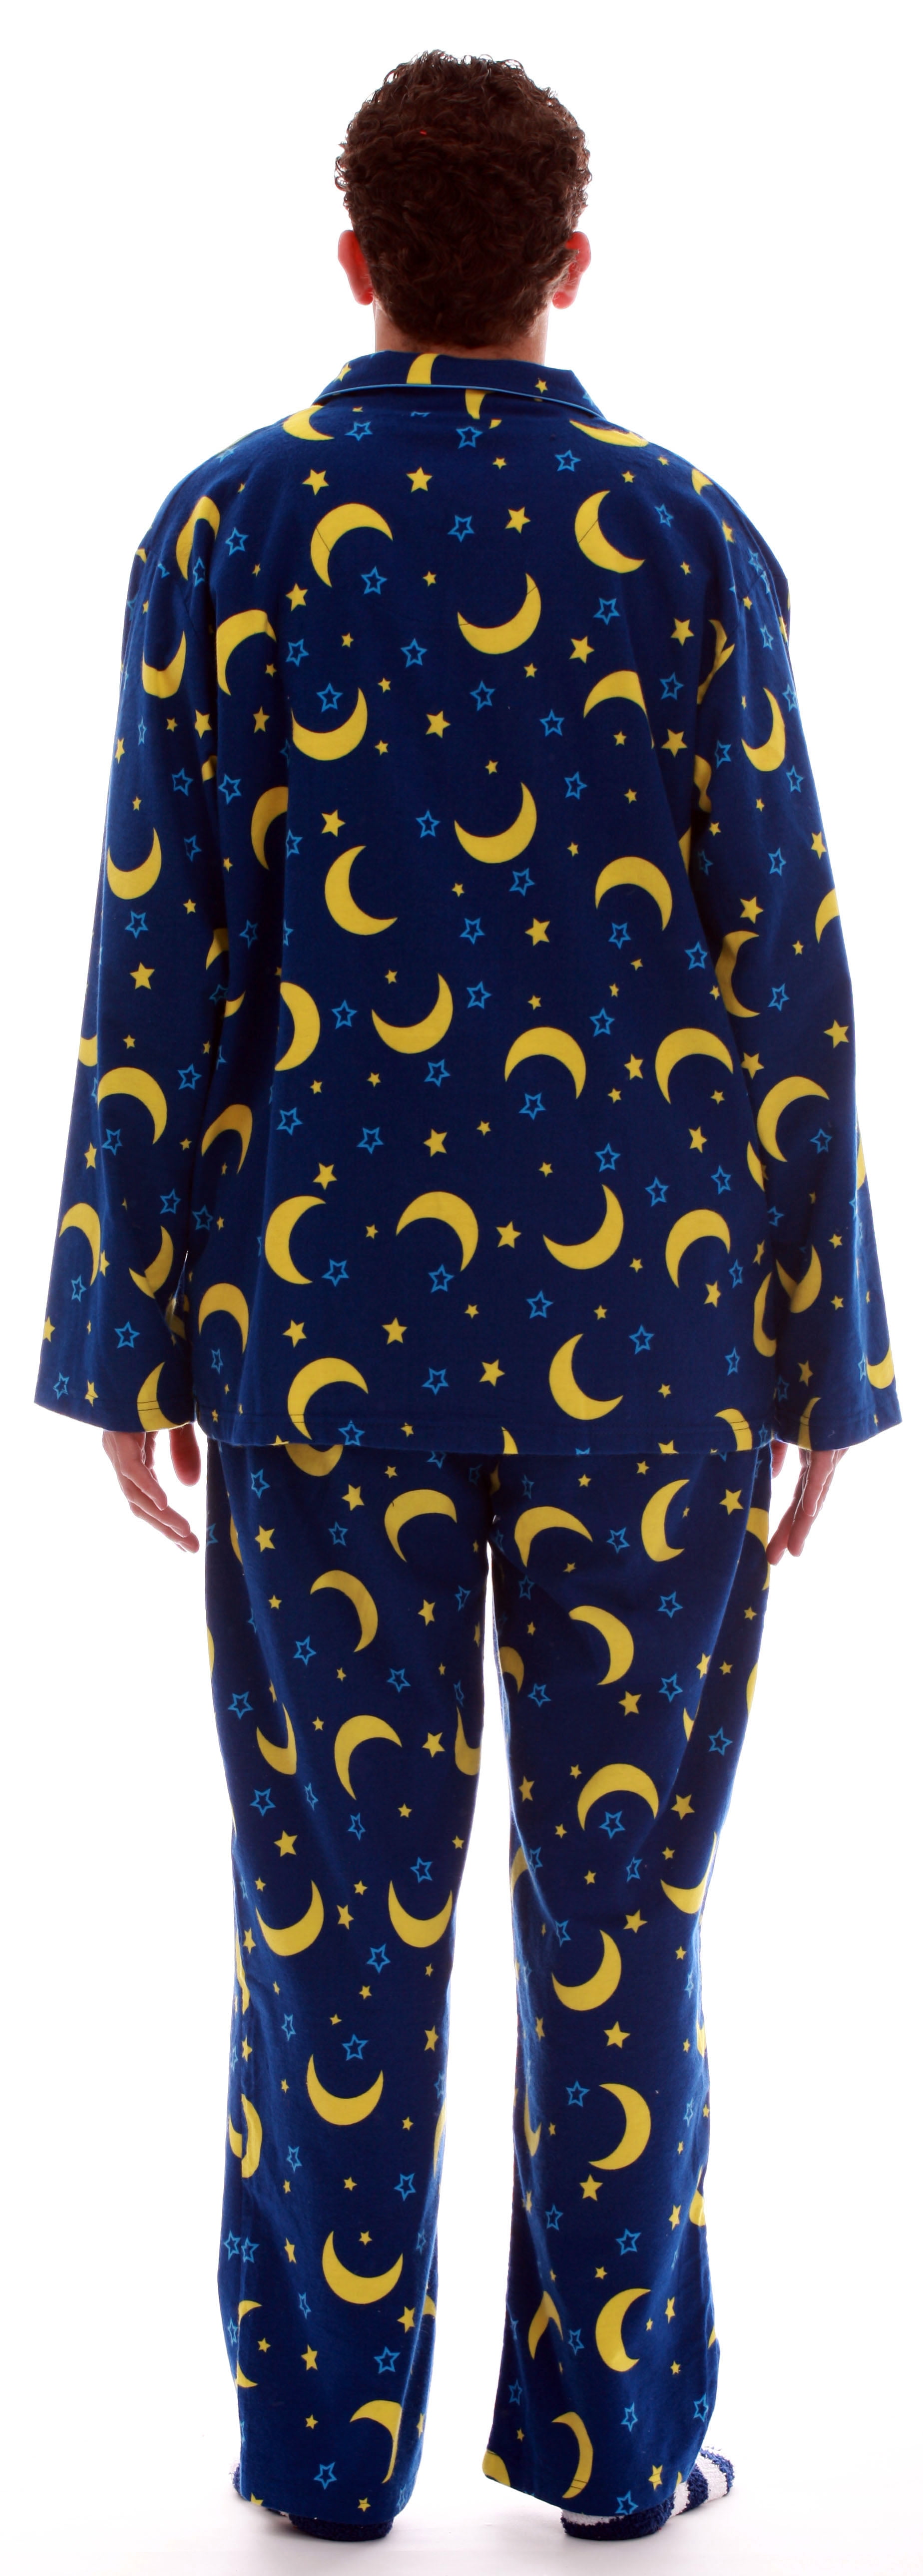 Mens Flannel Pajamas - Molly Gallivans